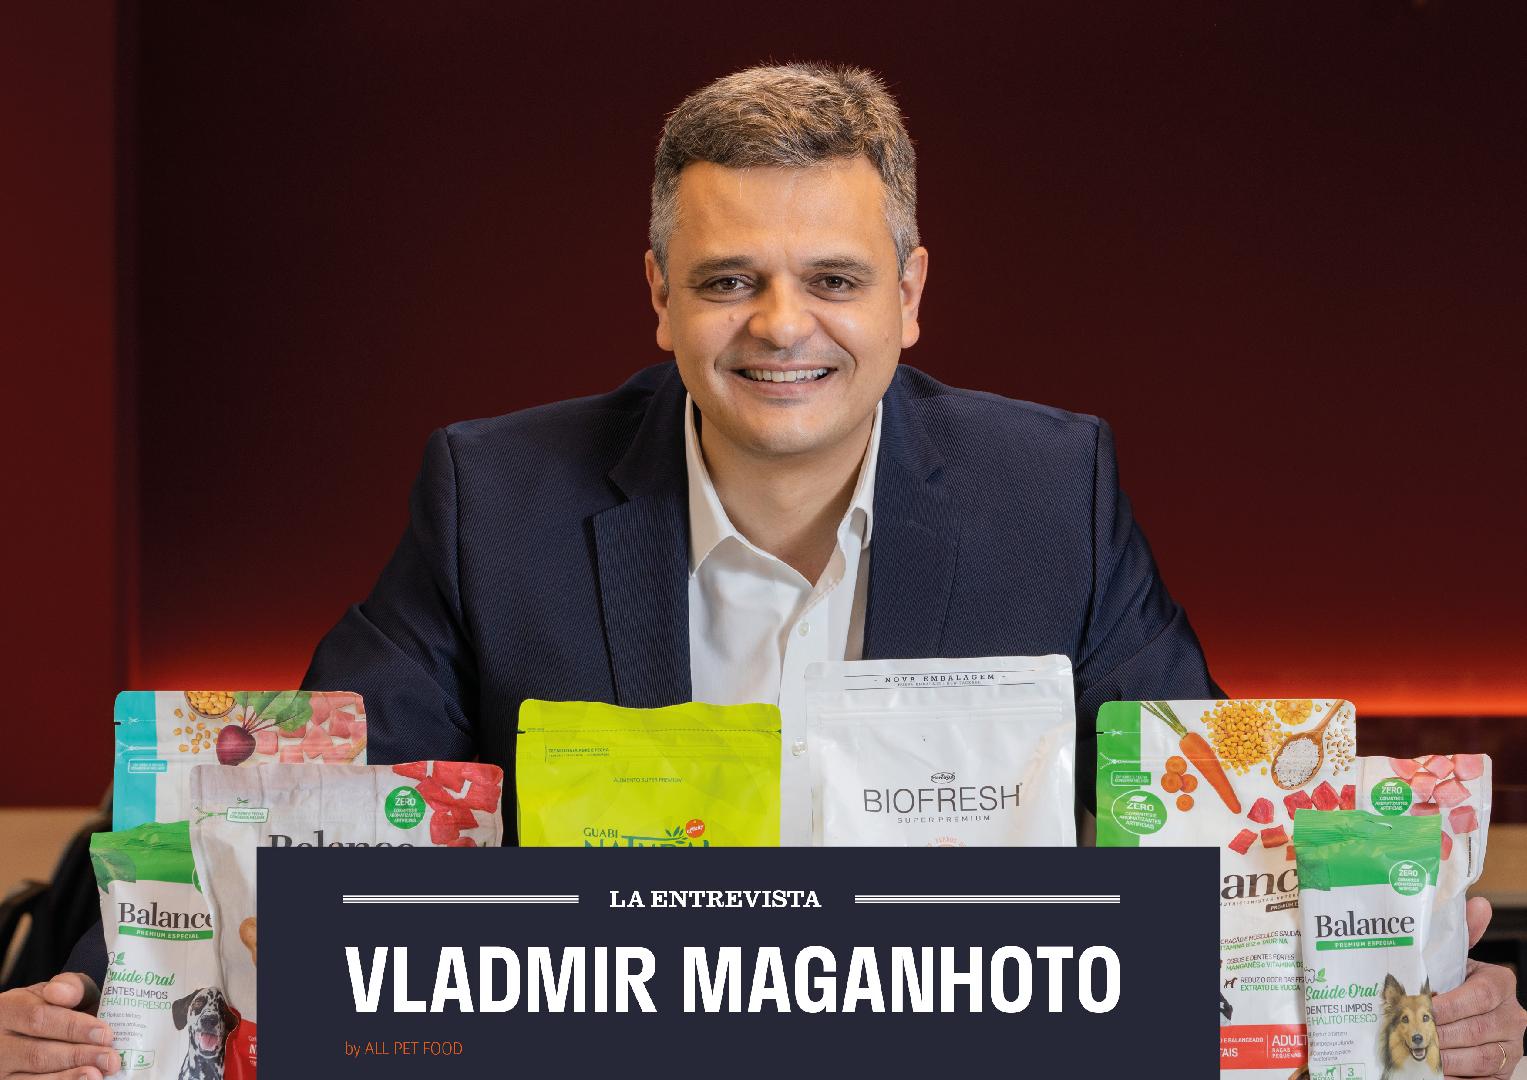 The Interview - Vladmir Maganhoto